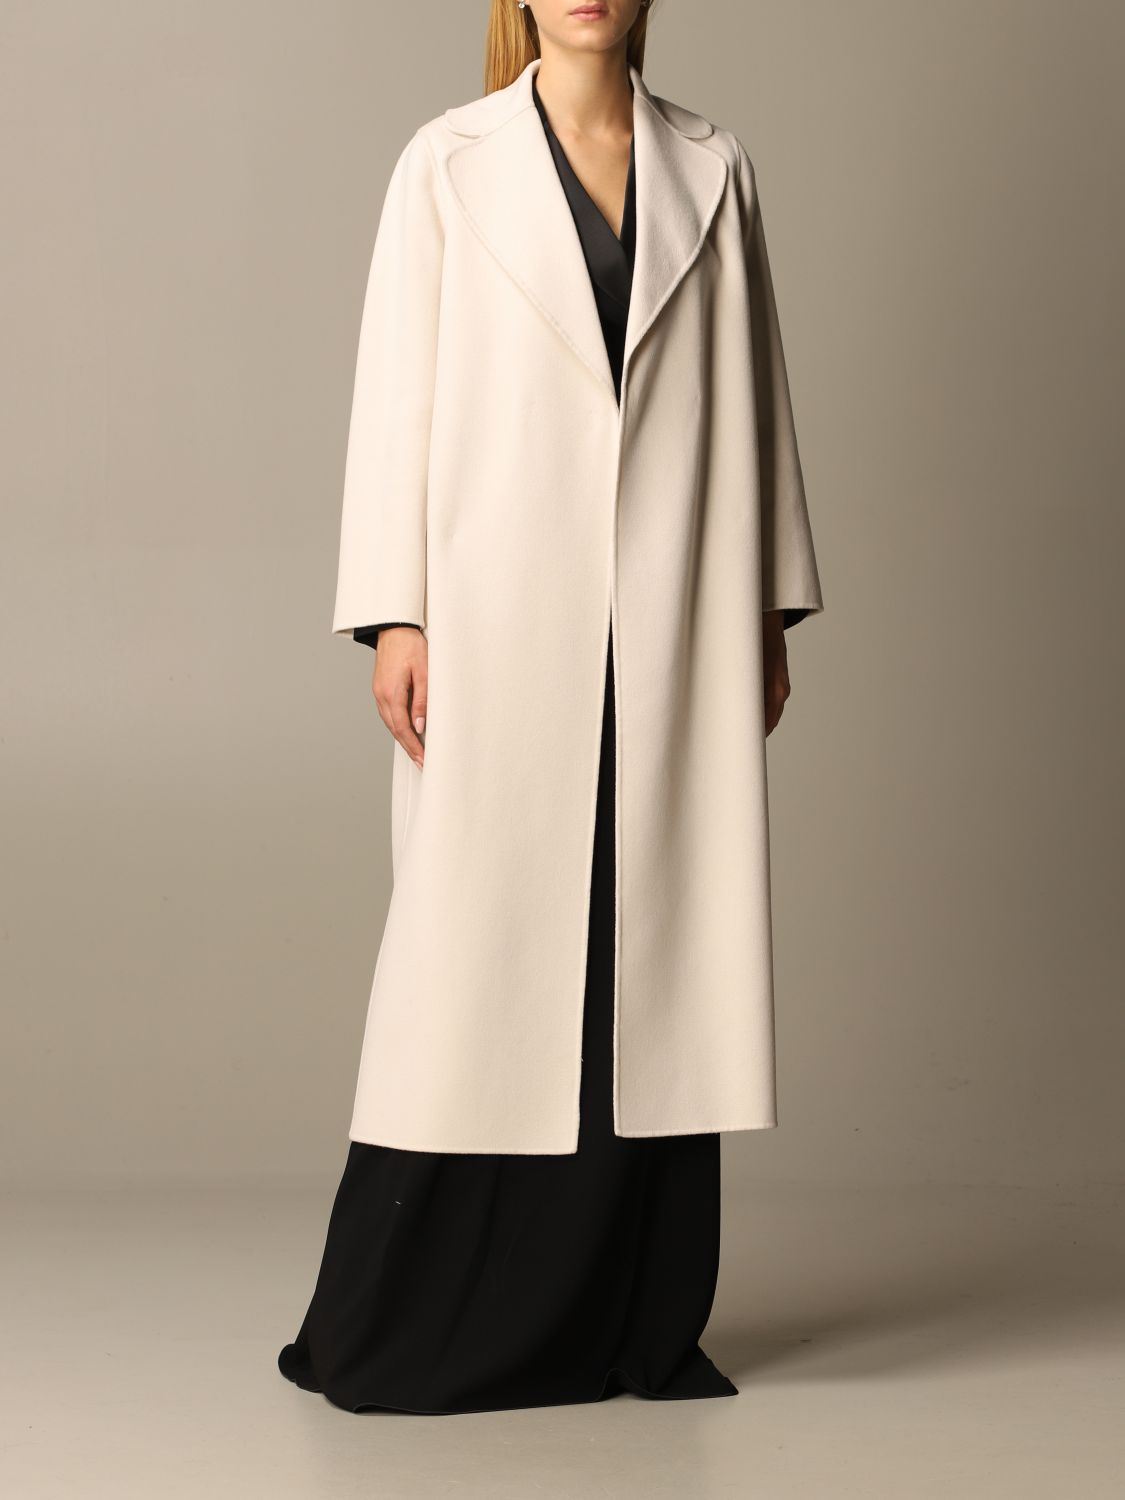 Poldo S Max Mara coat in virgin wool | Coat S Max Mara Women Yellow